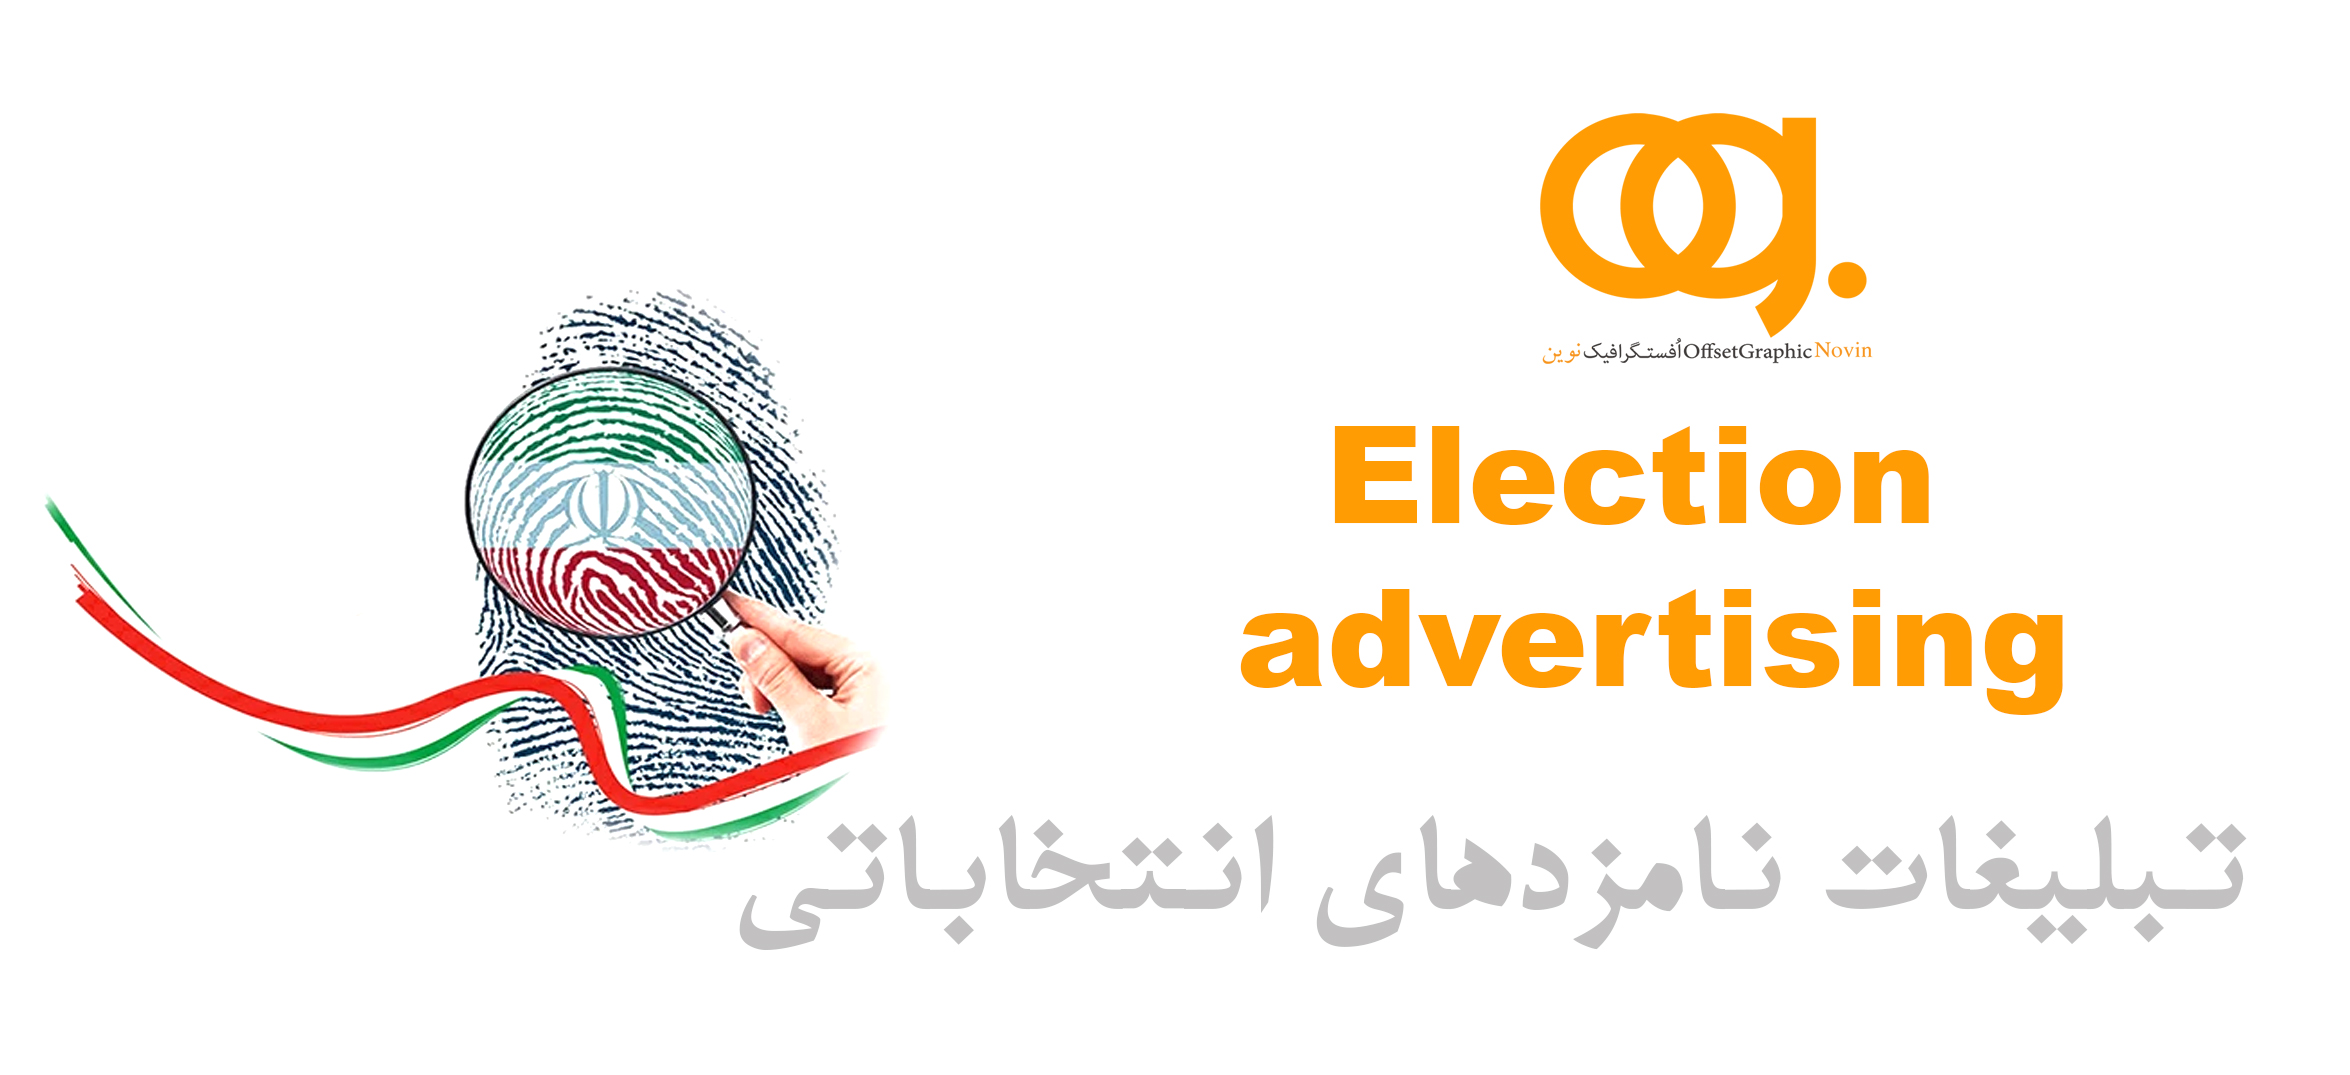 Election advertising تبلیغات نامزدهای انتخاباتی